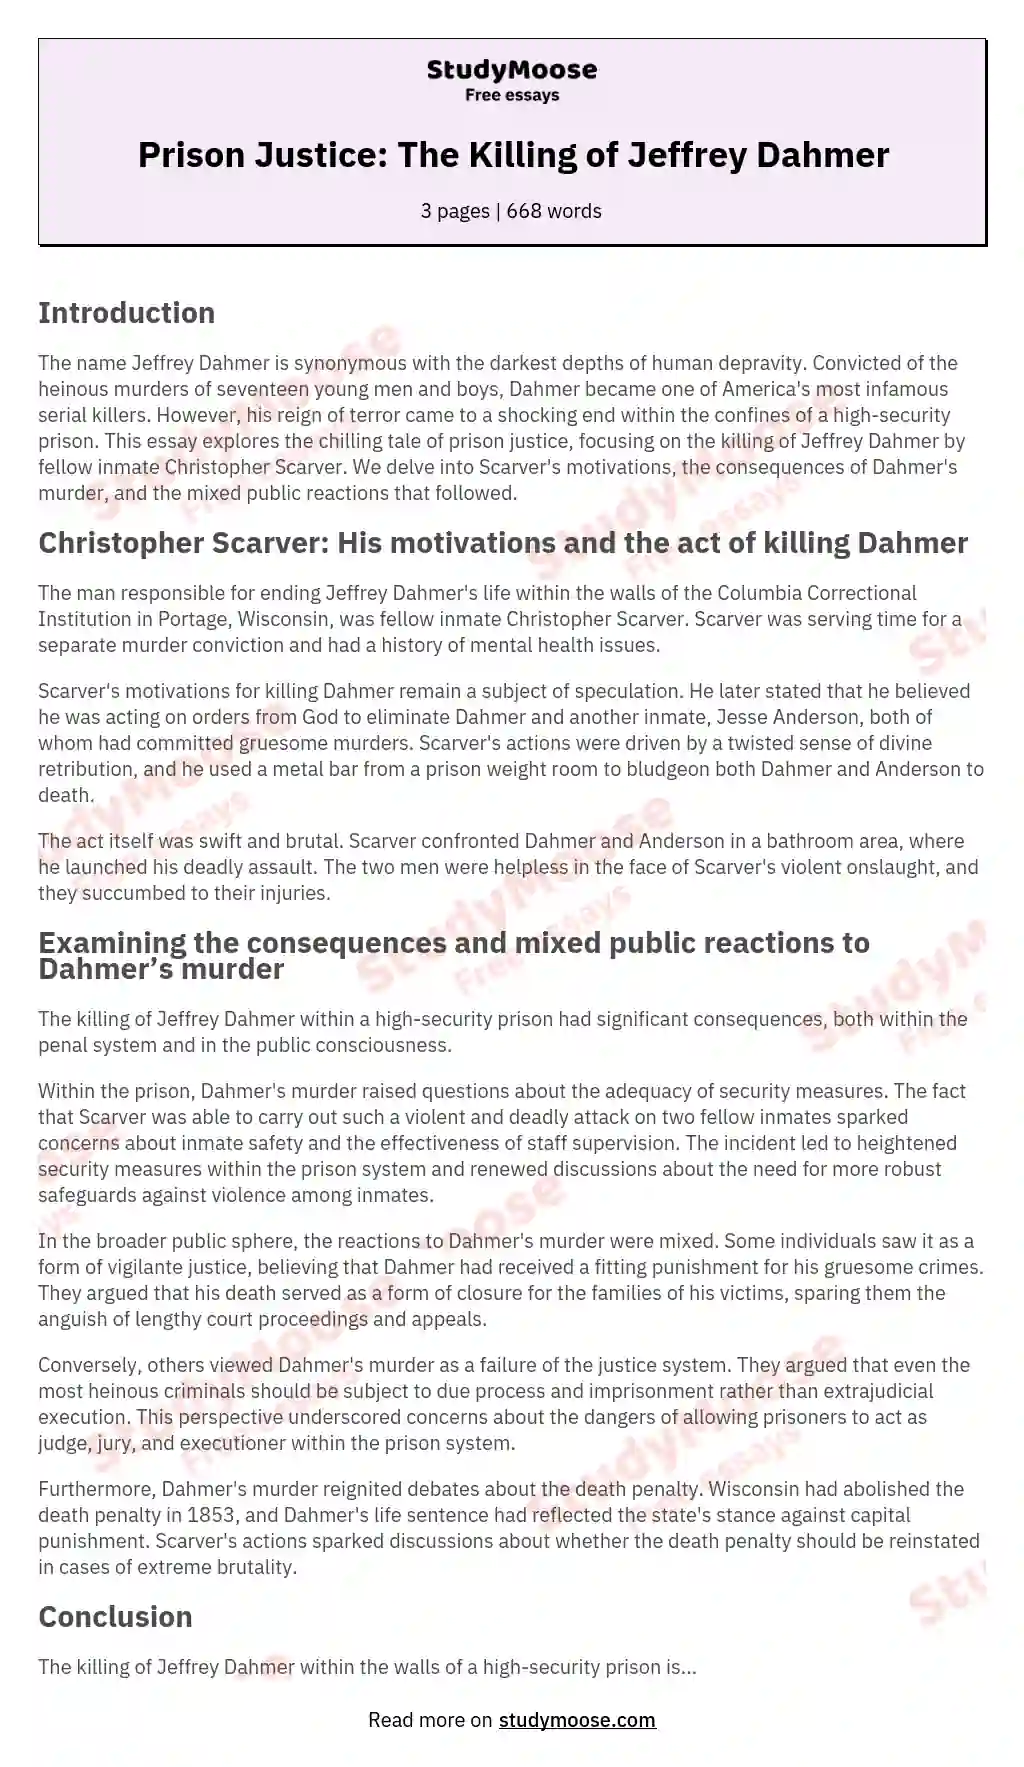 Prison Justice: The Killing of Jeffrey Dahmer essay